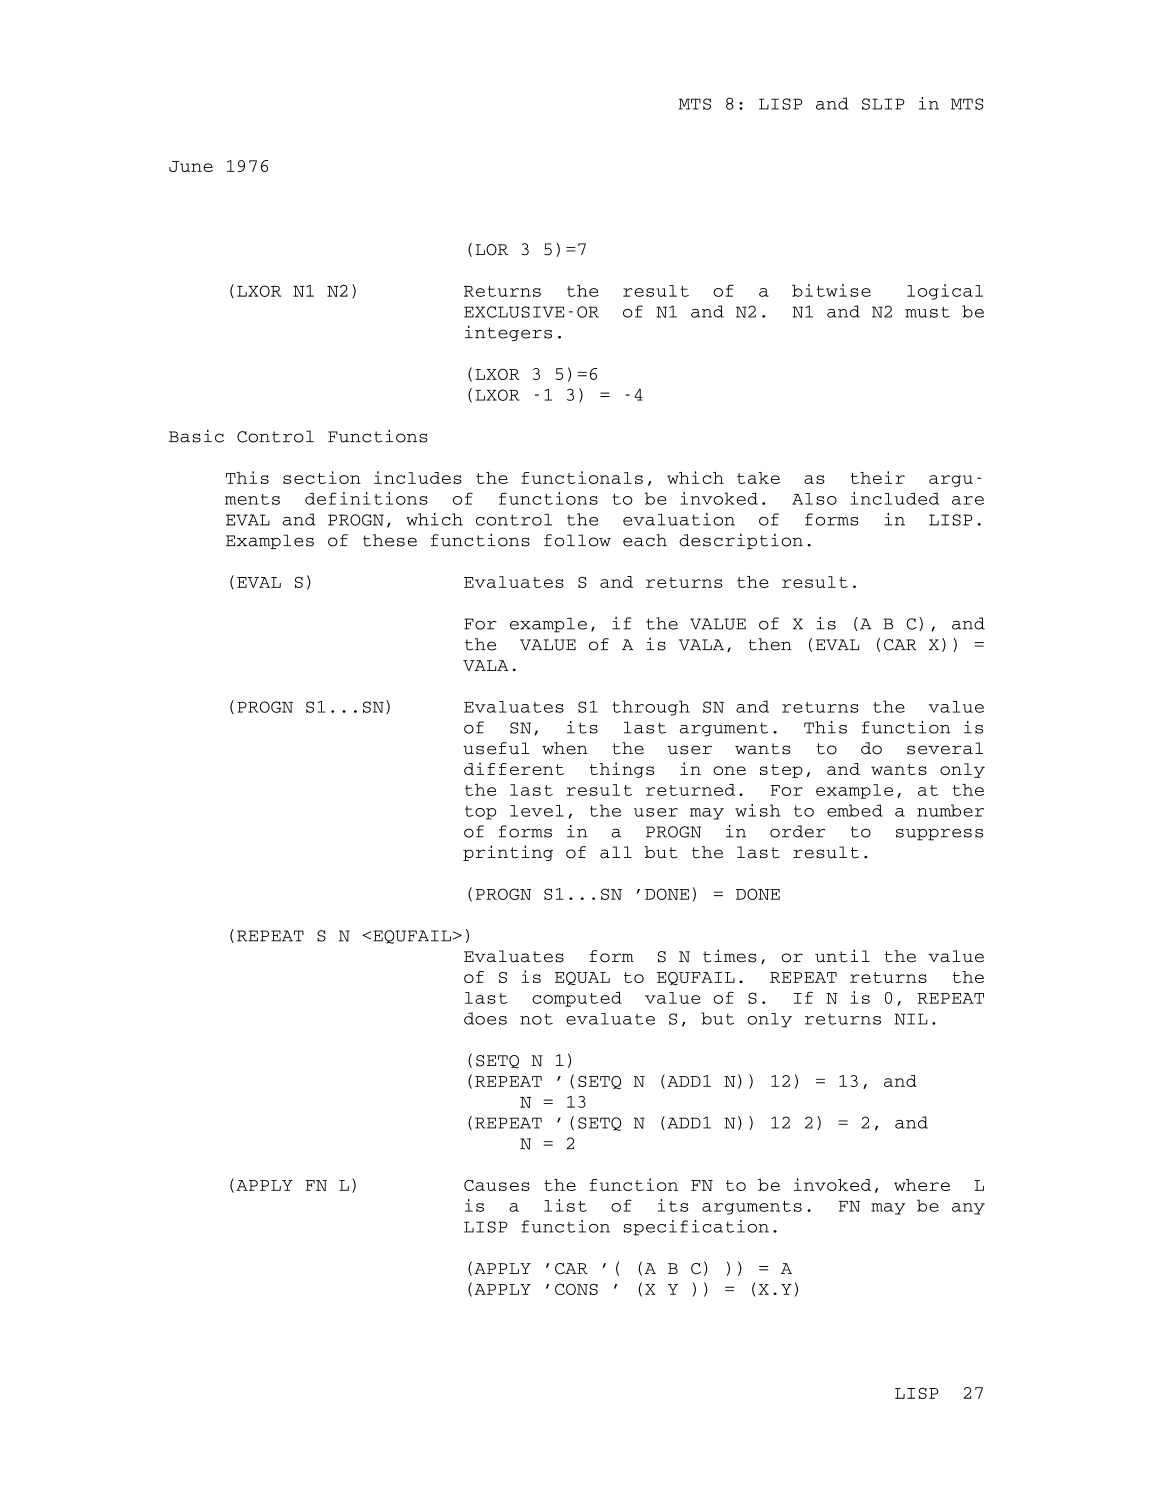 MTS Volume 8 - LISP and SLIP page 26